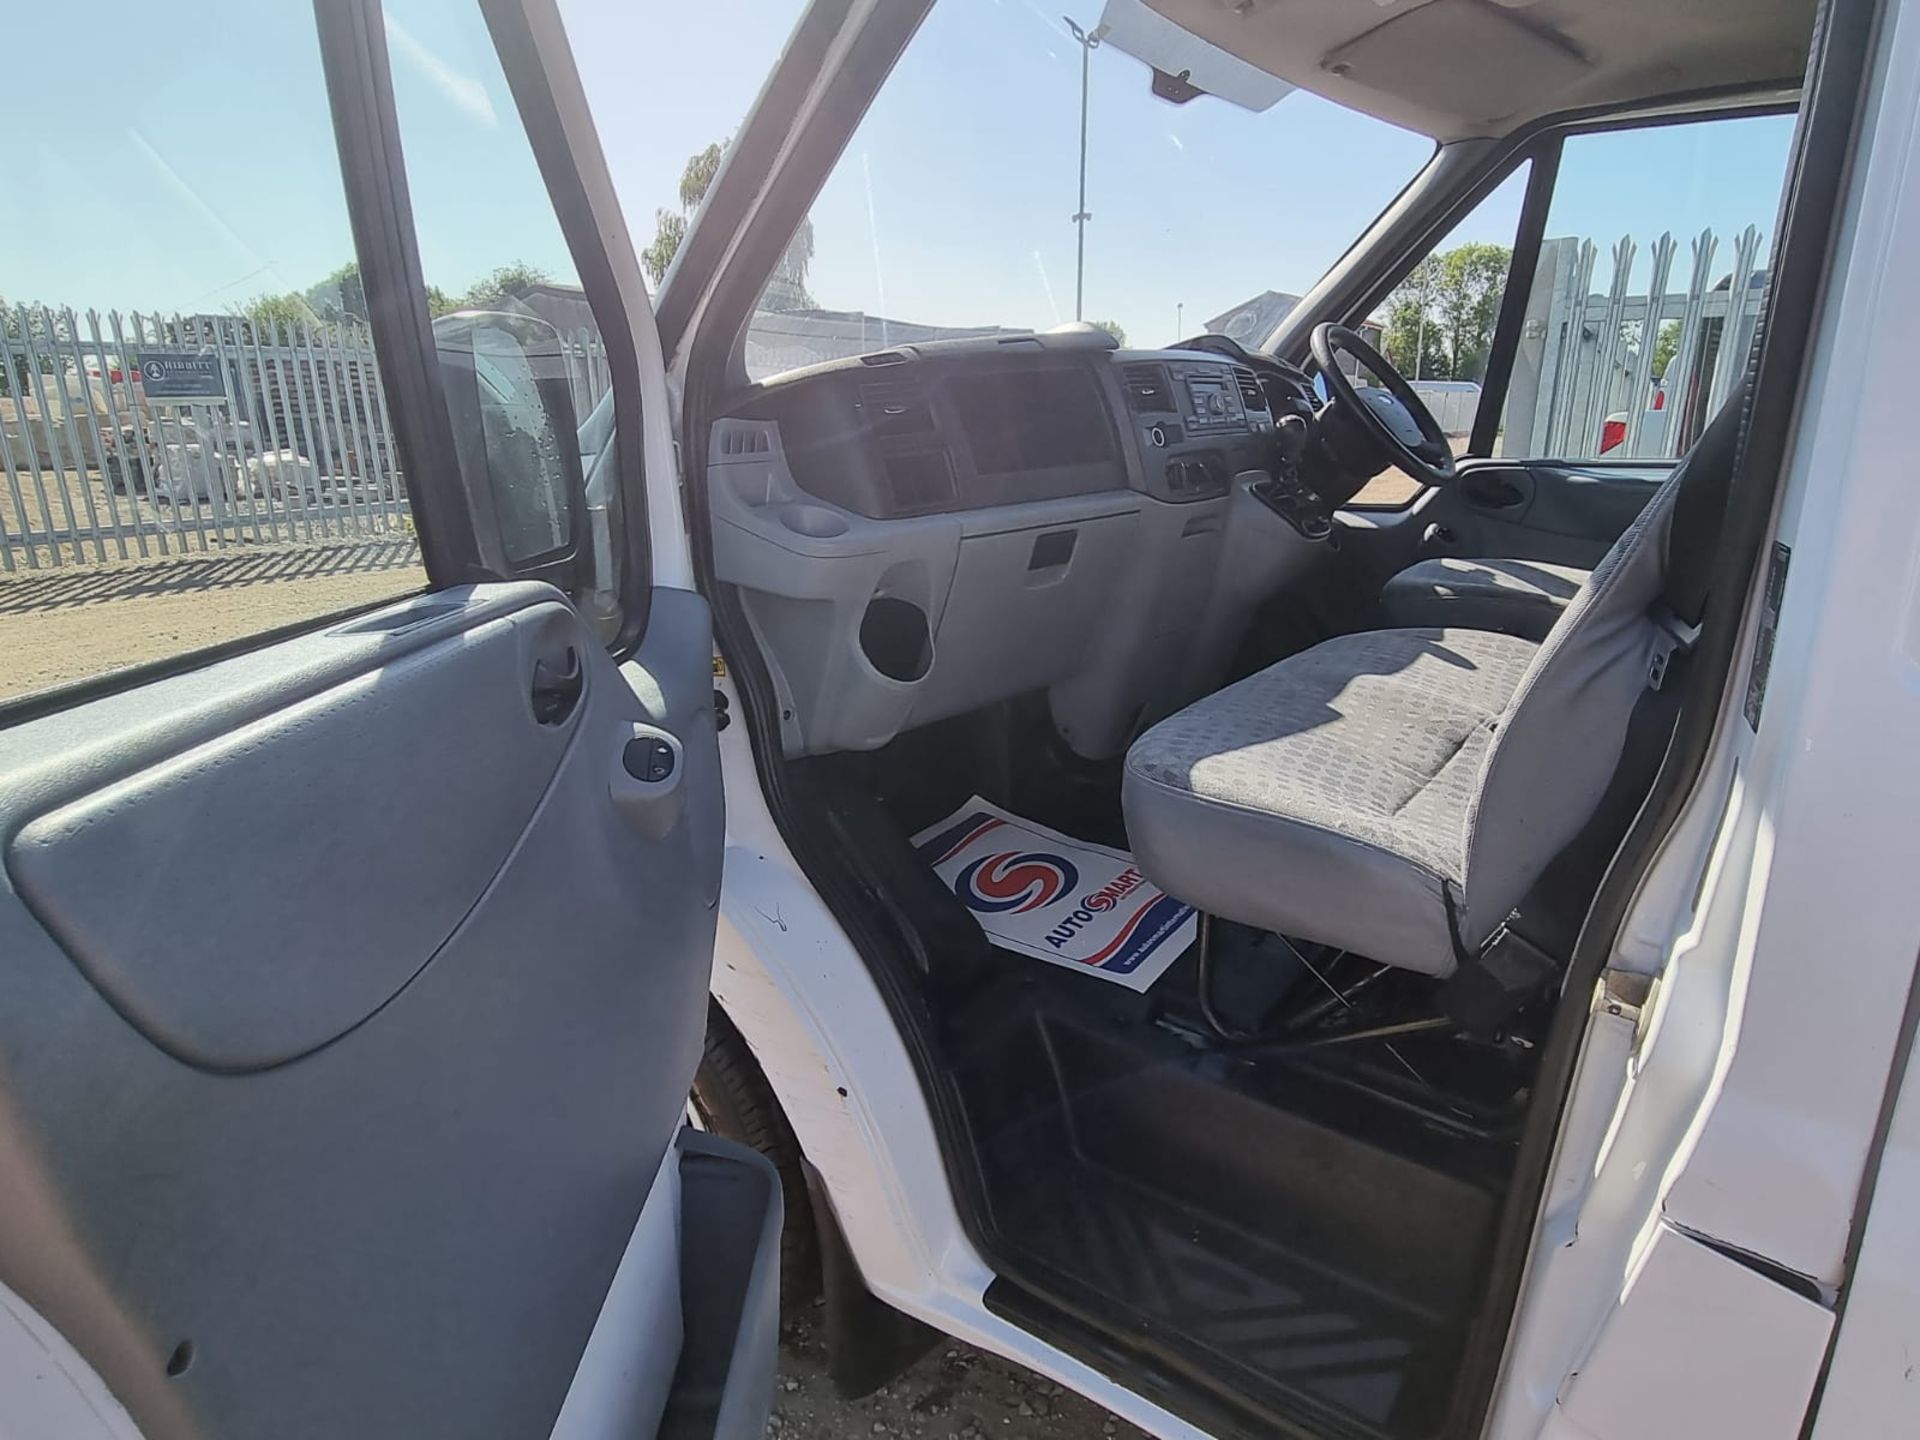 Ford Transit 2.2 TDCI 100 T280 L1 H1 2012 '62 Reg' `Panel van - 3 seats - Image 11 of 16